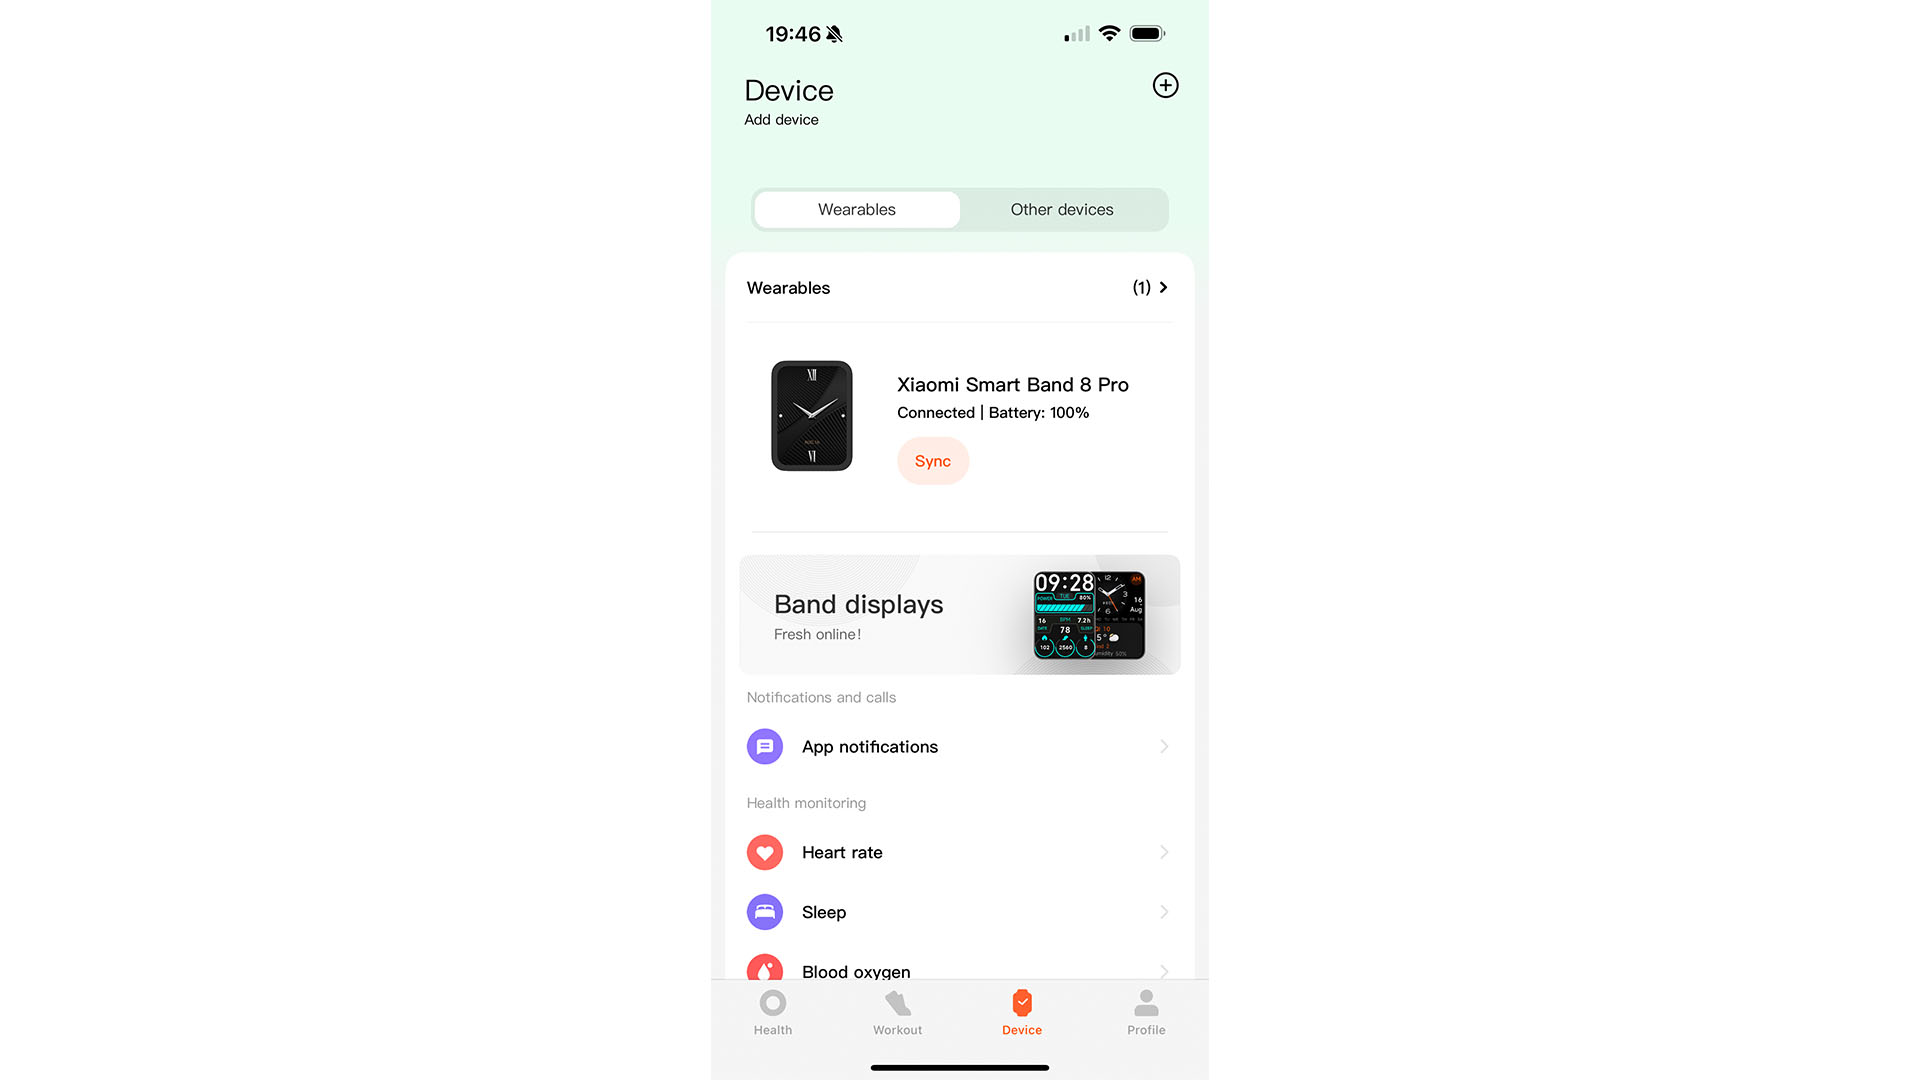 Xiaomi Smart Band 8 companion app devices page